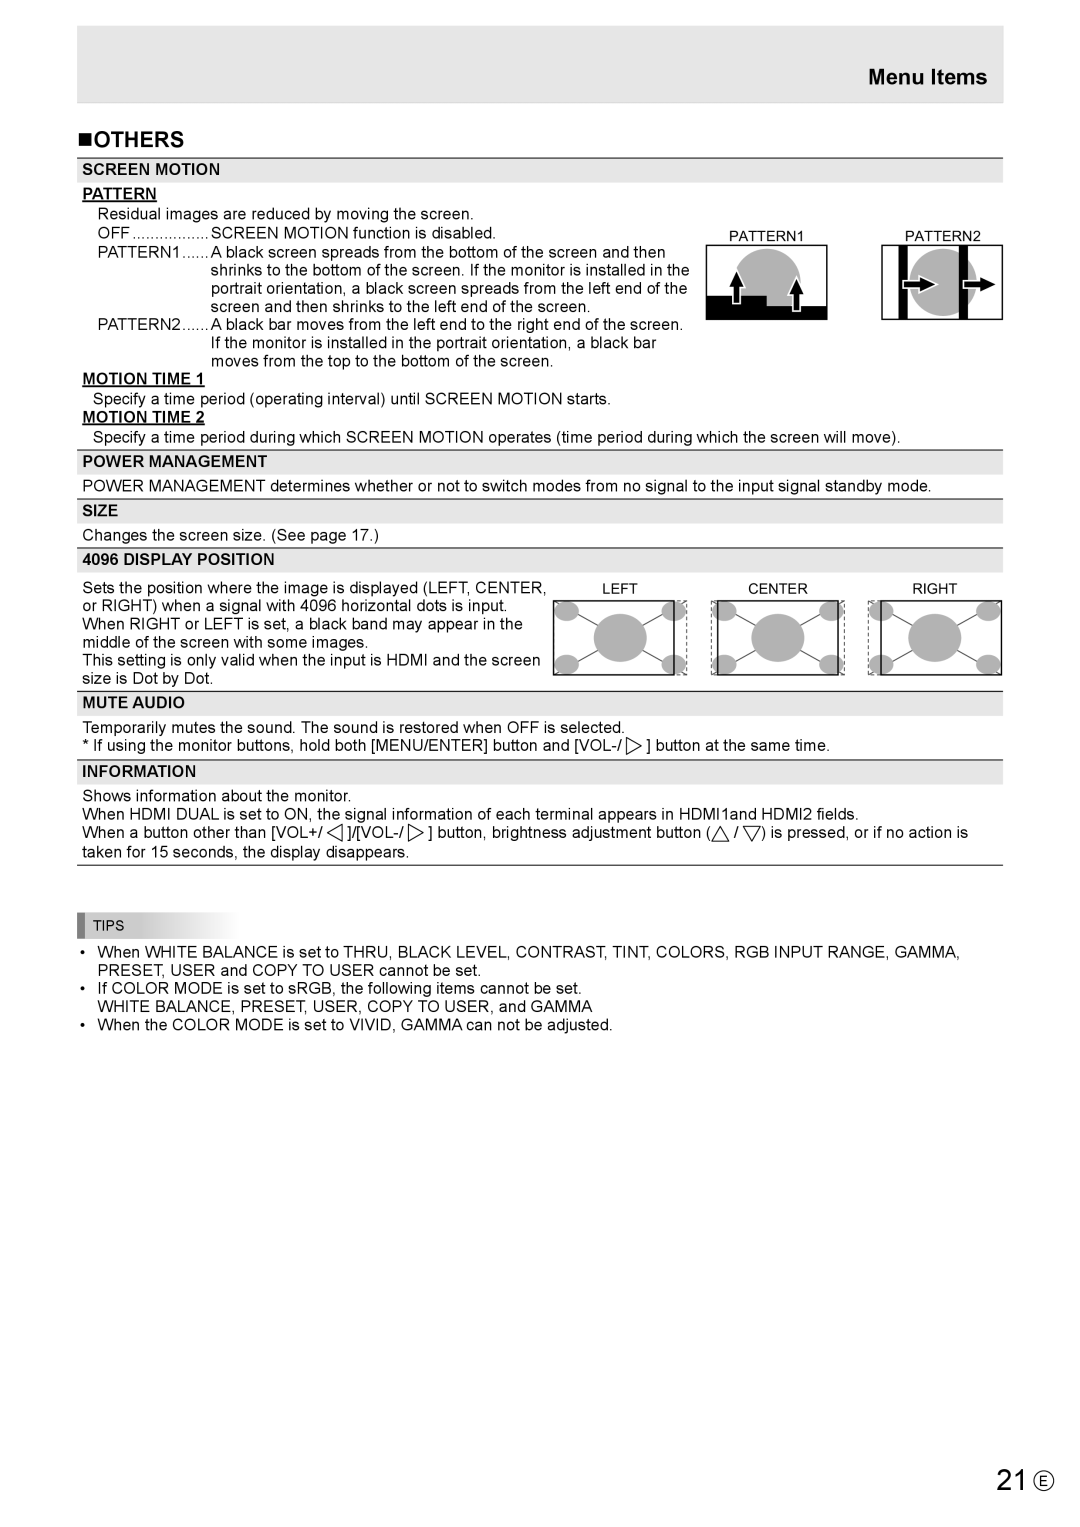 Sharp PN-K321 operation manual 21 E, Menu Items nOTHERS 